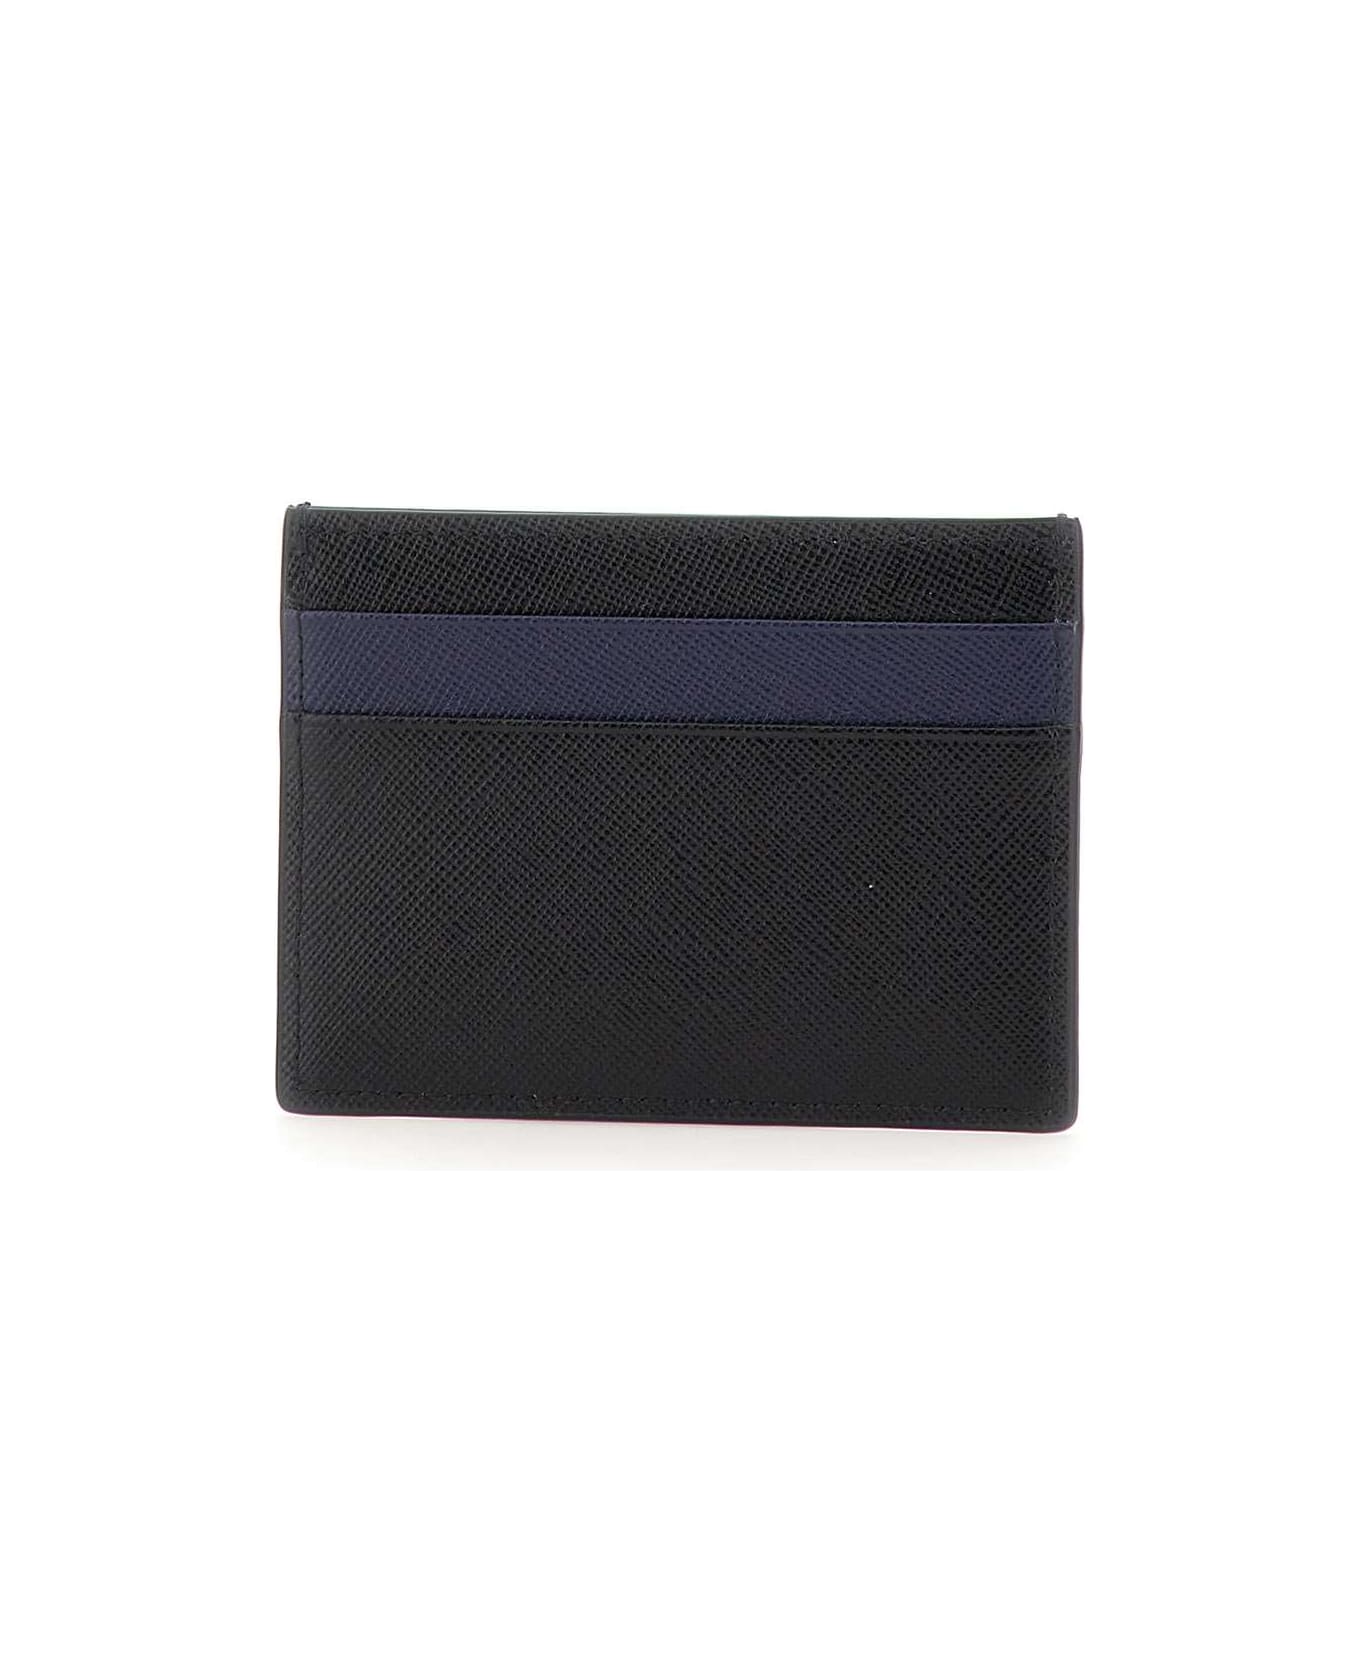 Marni 'cc Holder' Leather Card Holder - BLACK/BLUBLACK 財布